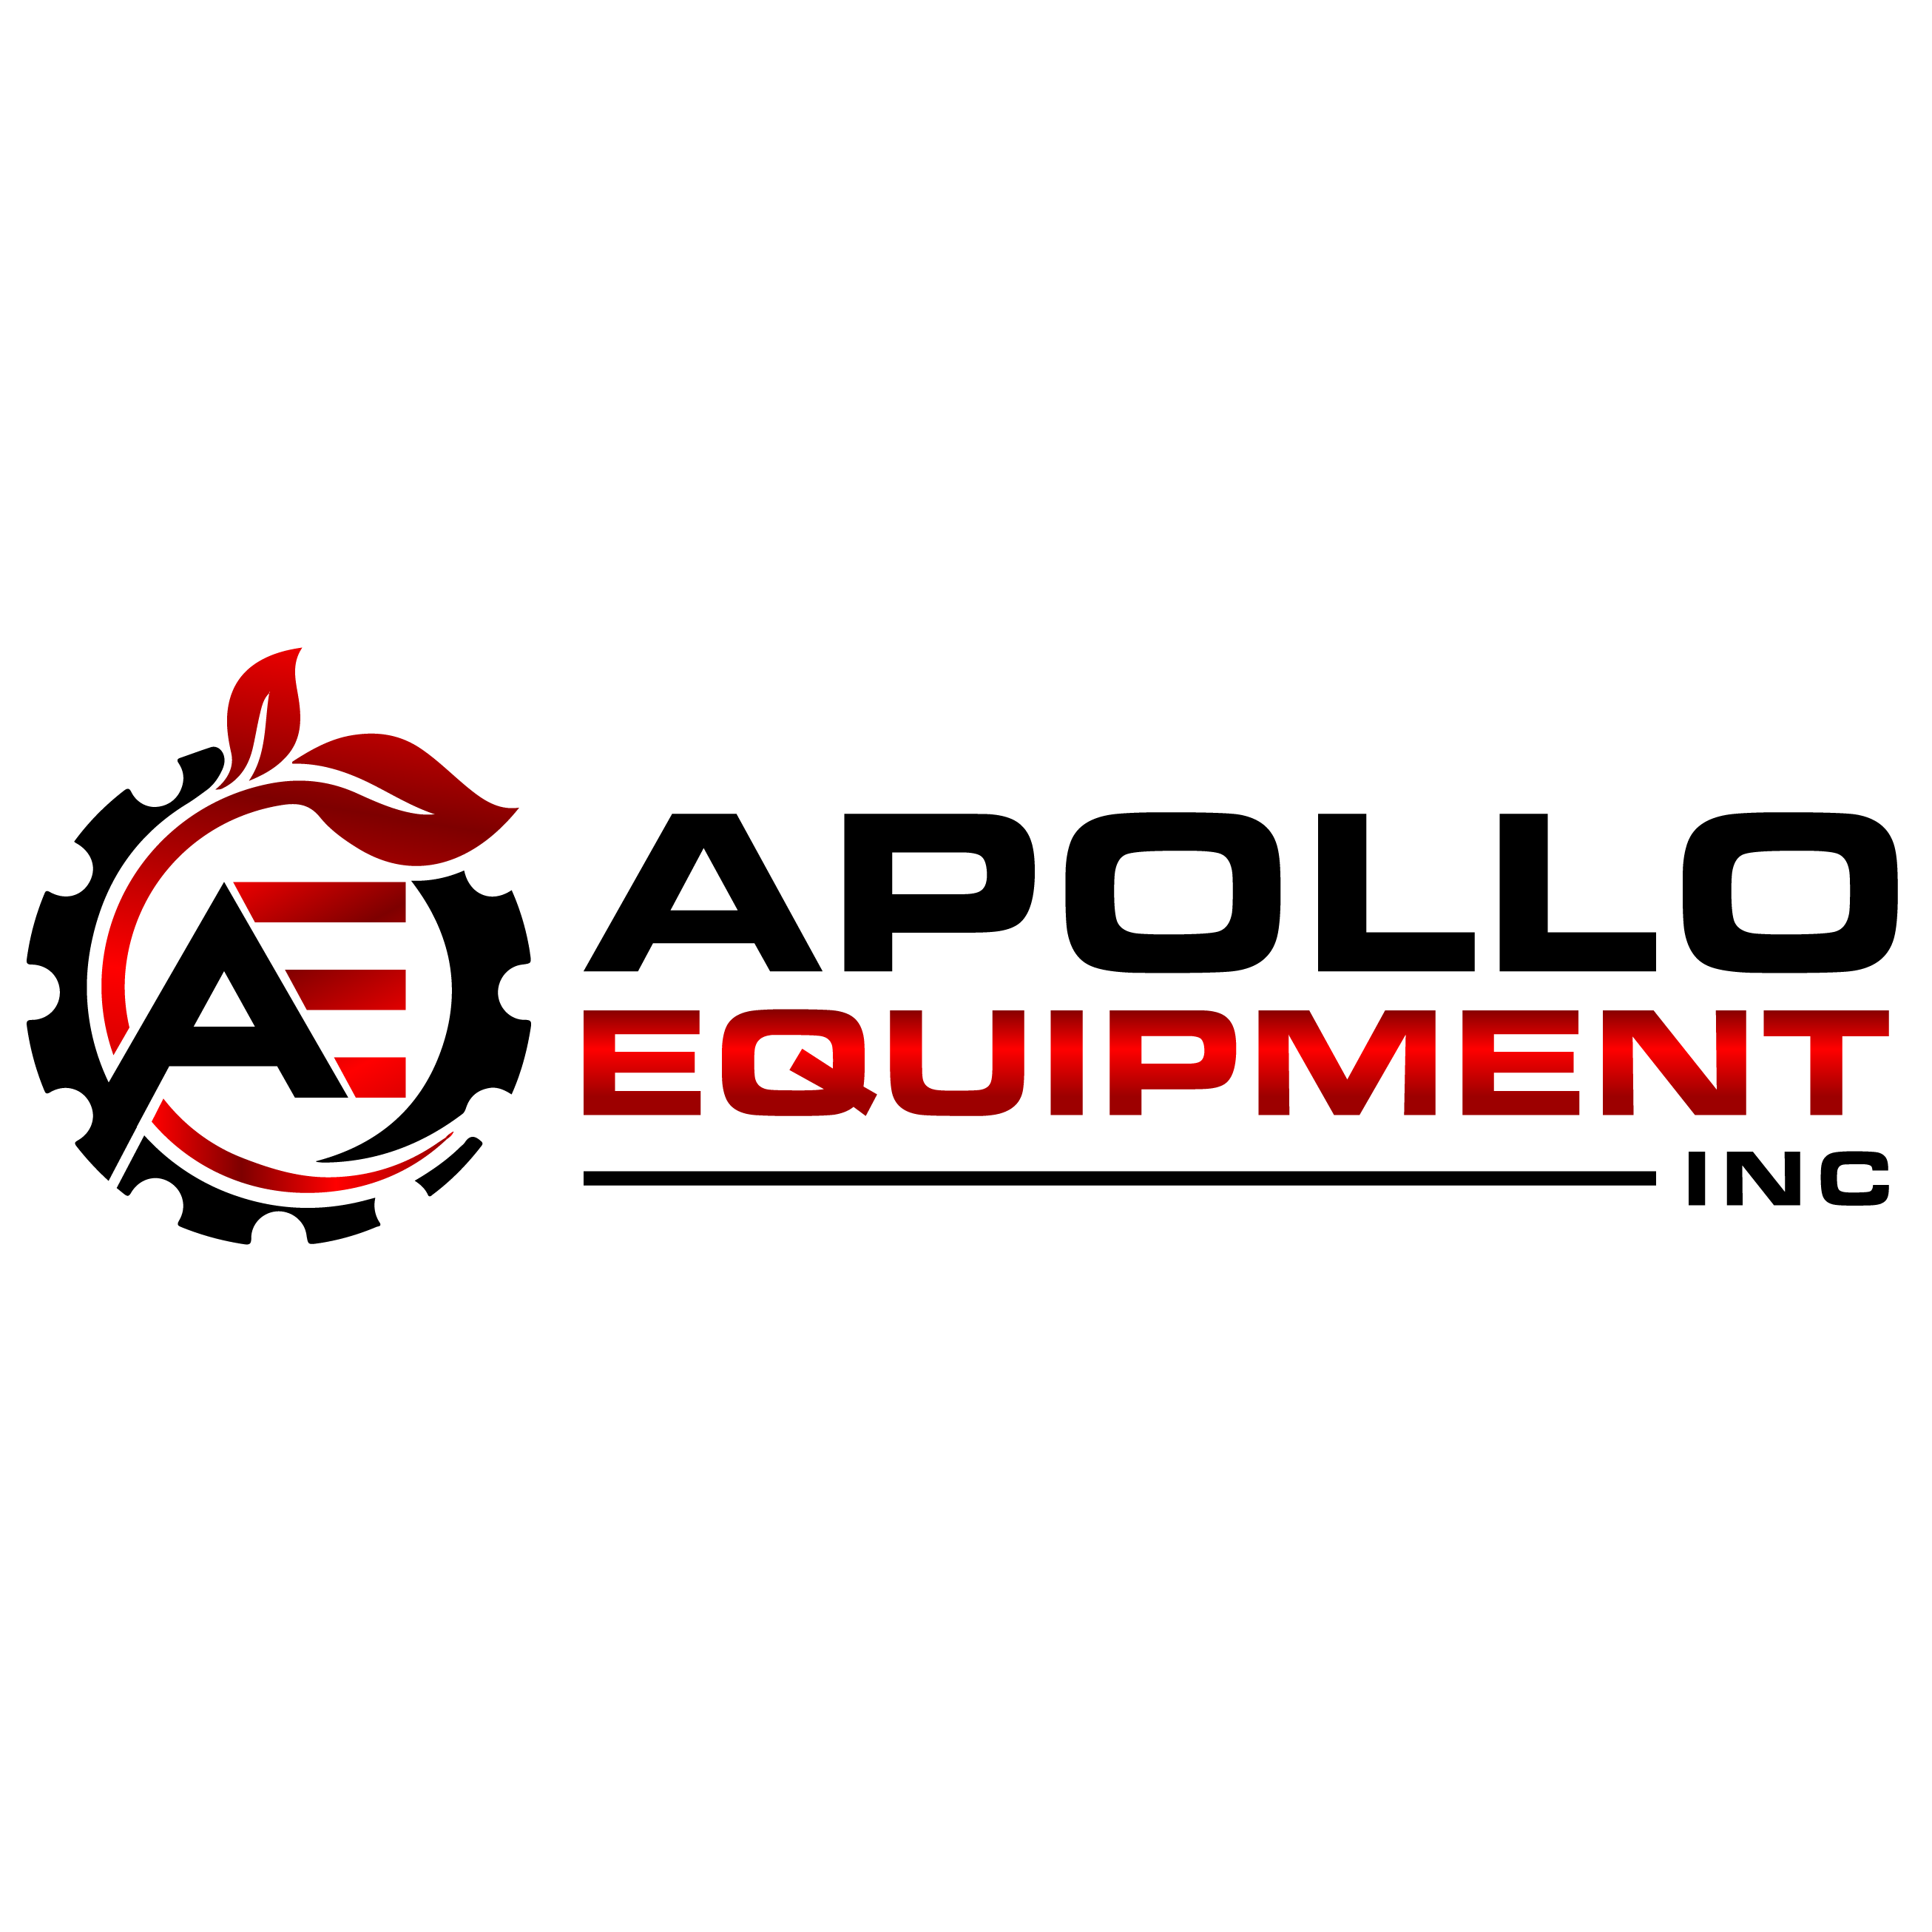 Apollo Equipment